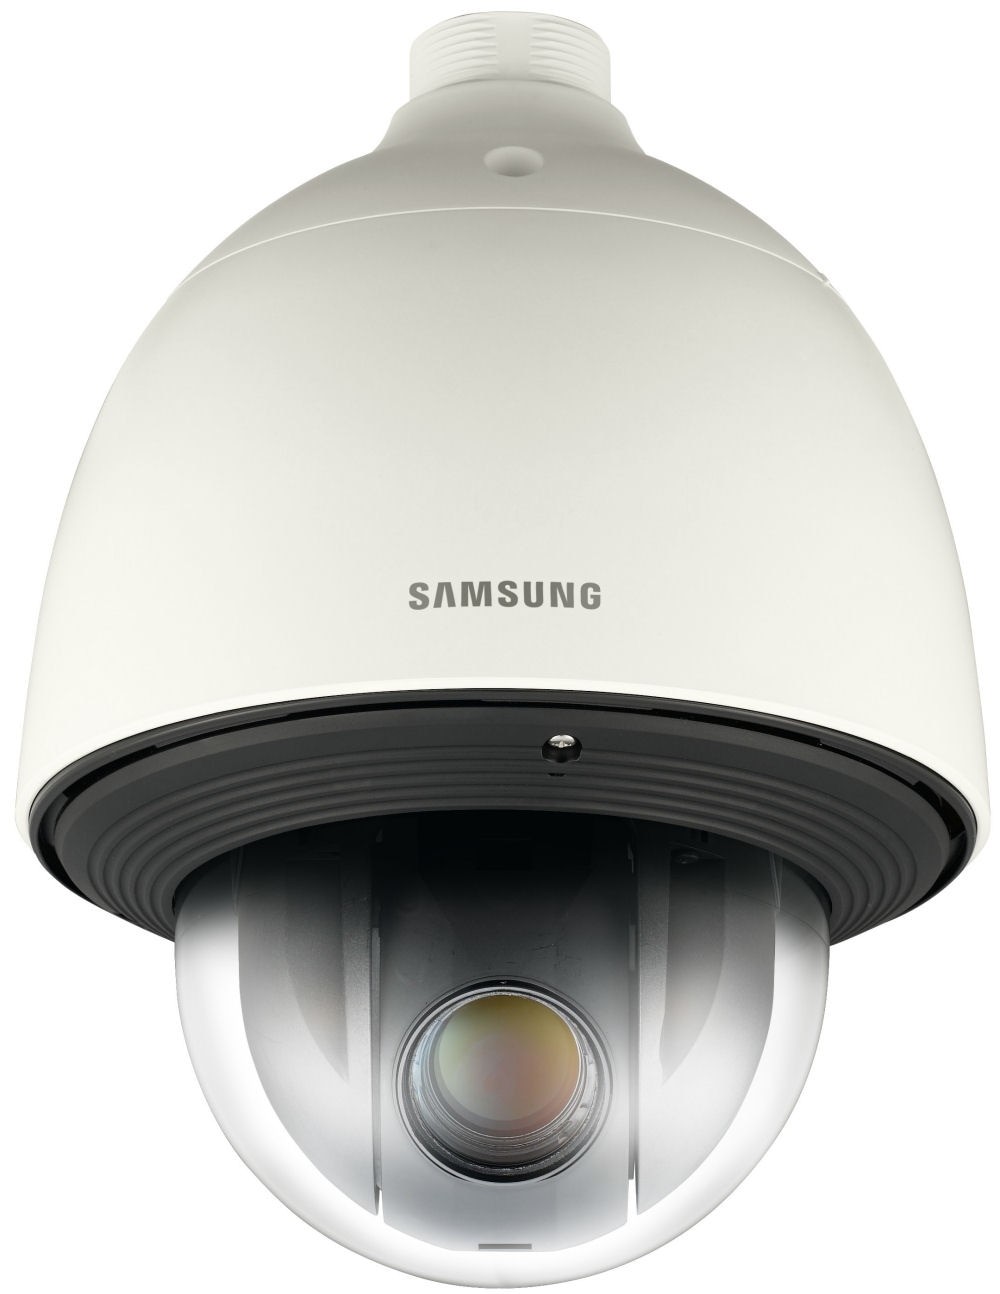 Samsung SCP3371PH 37x High Resolution WDR PTZ Dome Camera